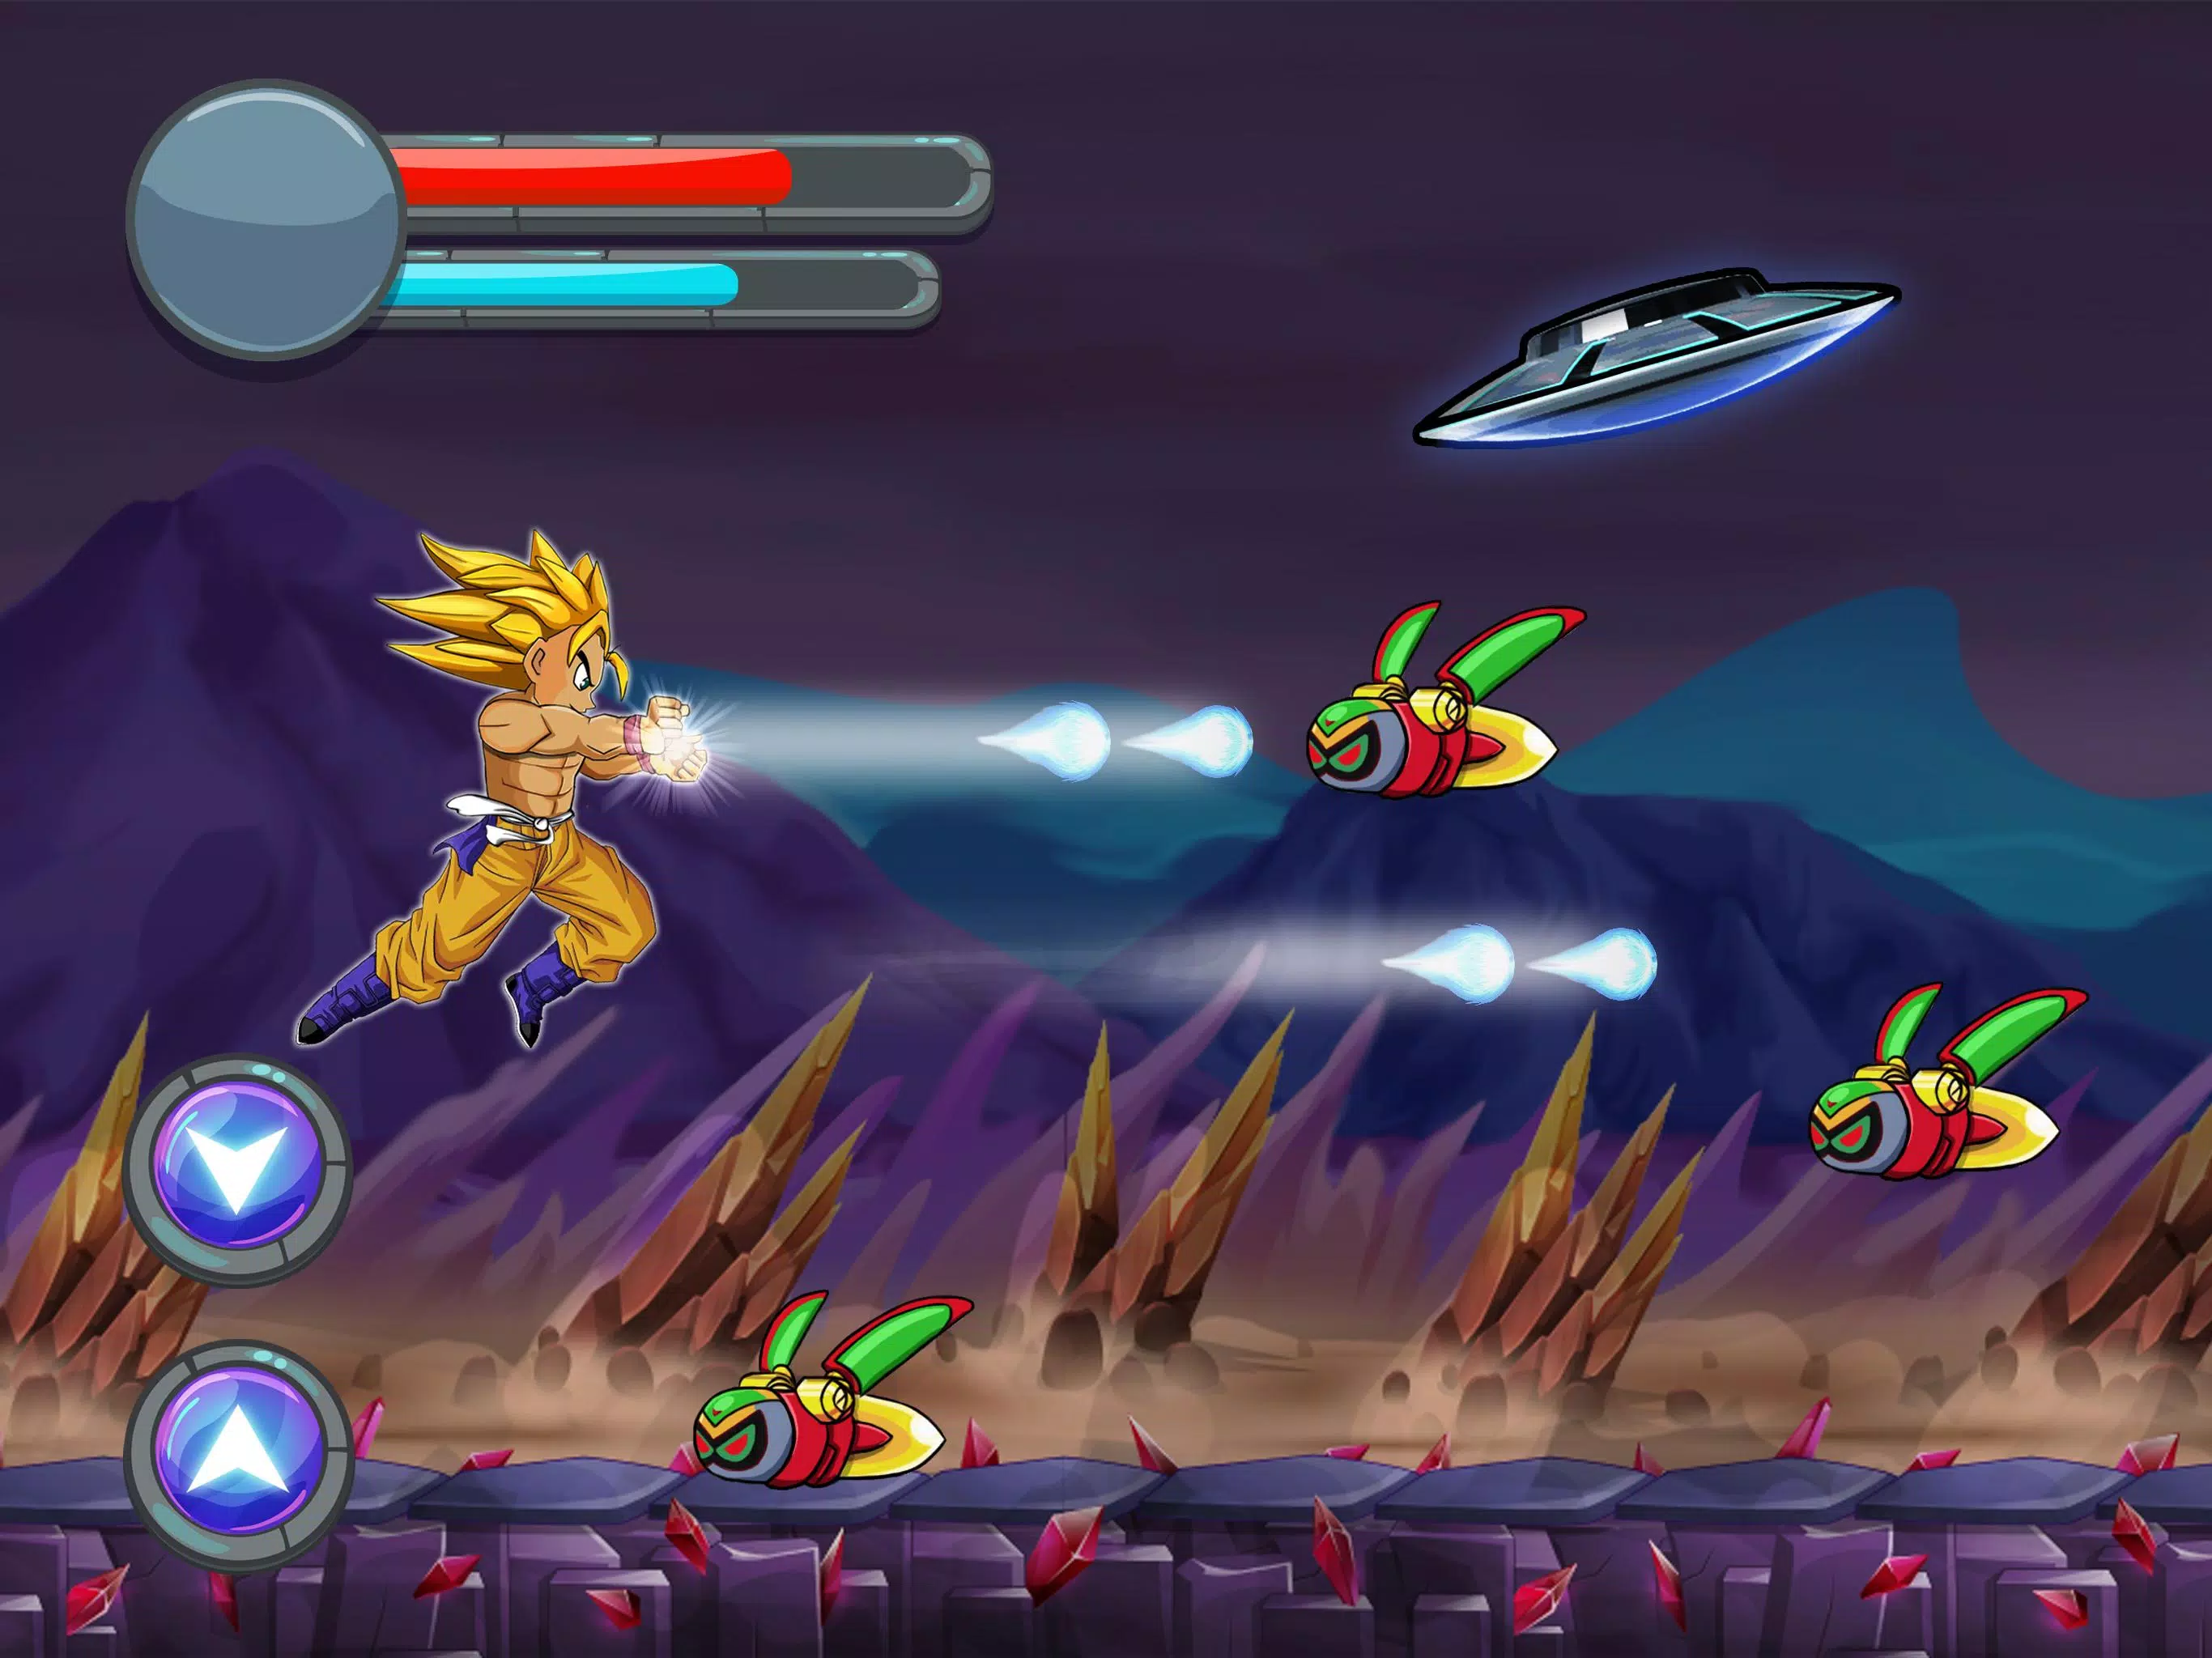 Saiyan Dragon Goku: Ball Fighter Z APK for Android Download